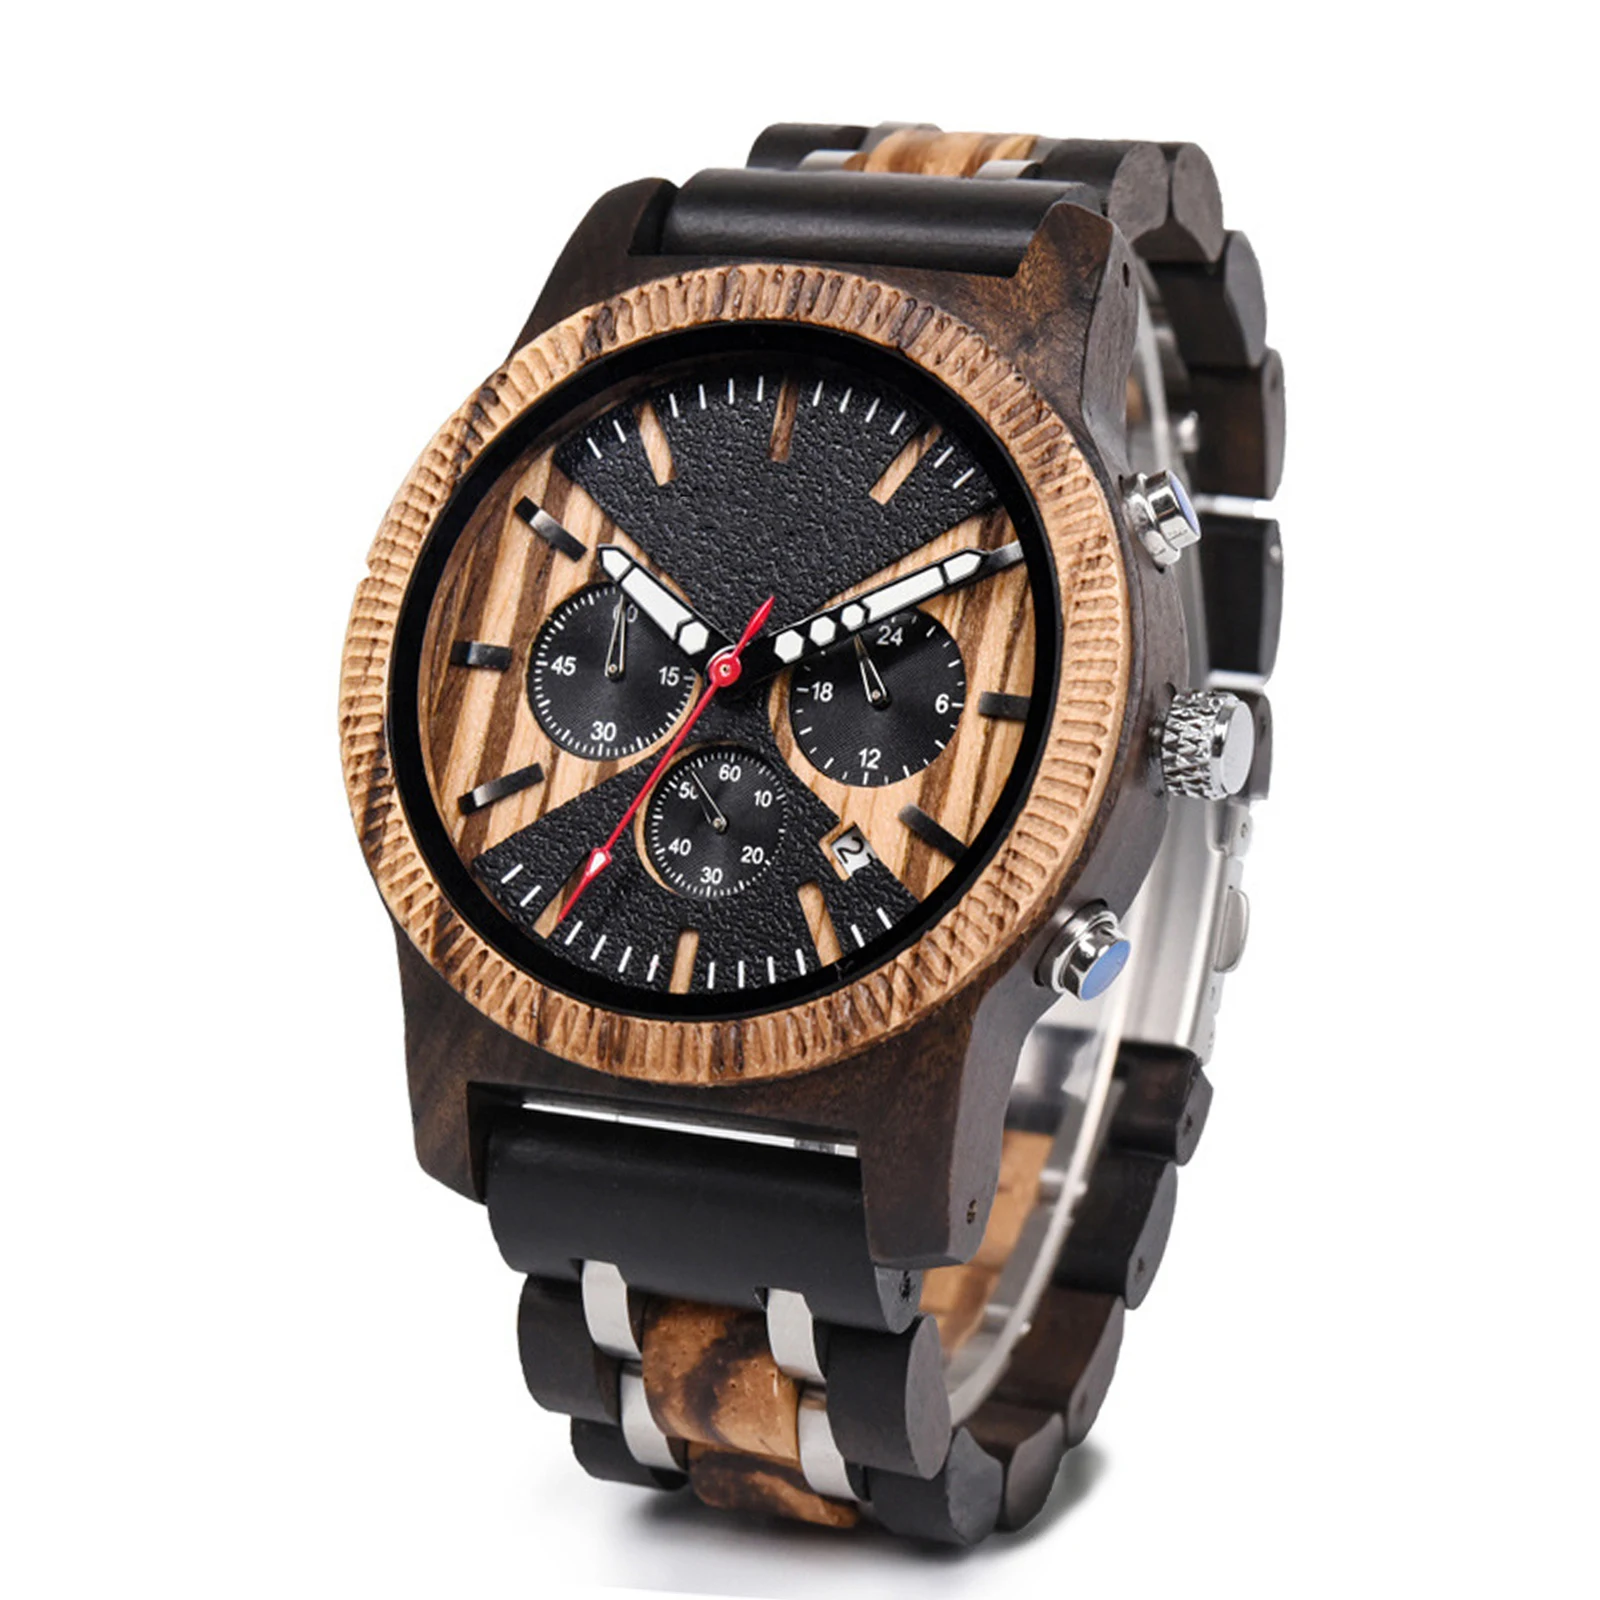 

Men's Wooden Quartz Wristwatches, Fashionable Hand Engraved Analog Watch, Best Gift for Anniversary/Birthday,bracelet